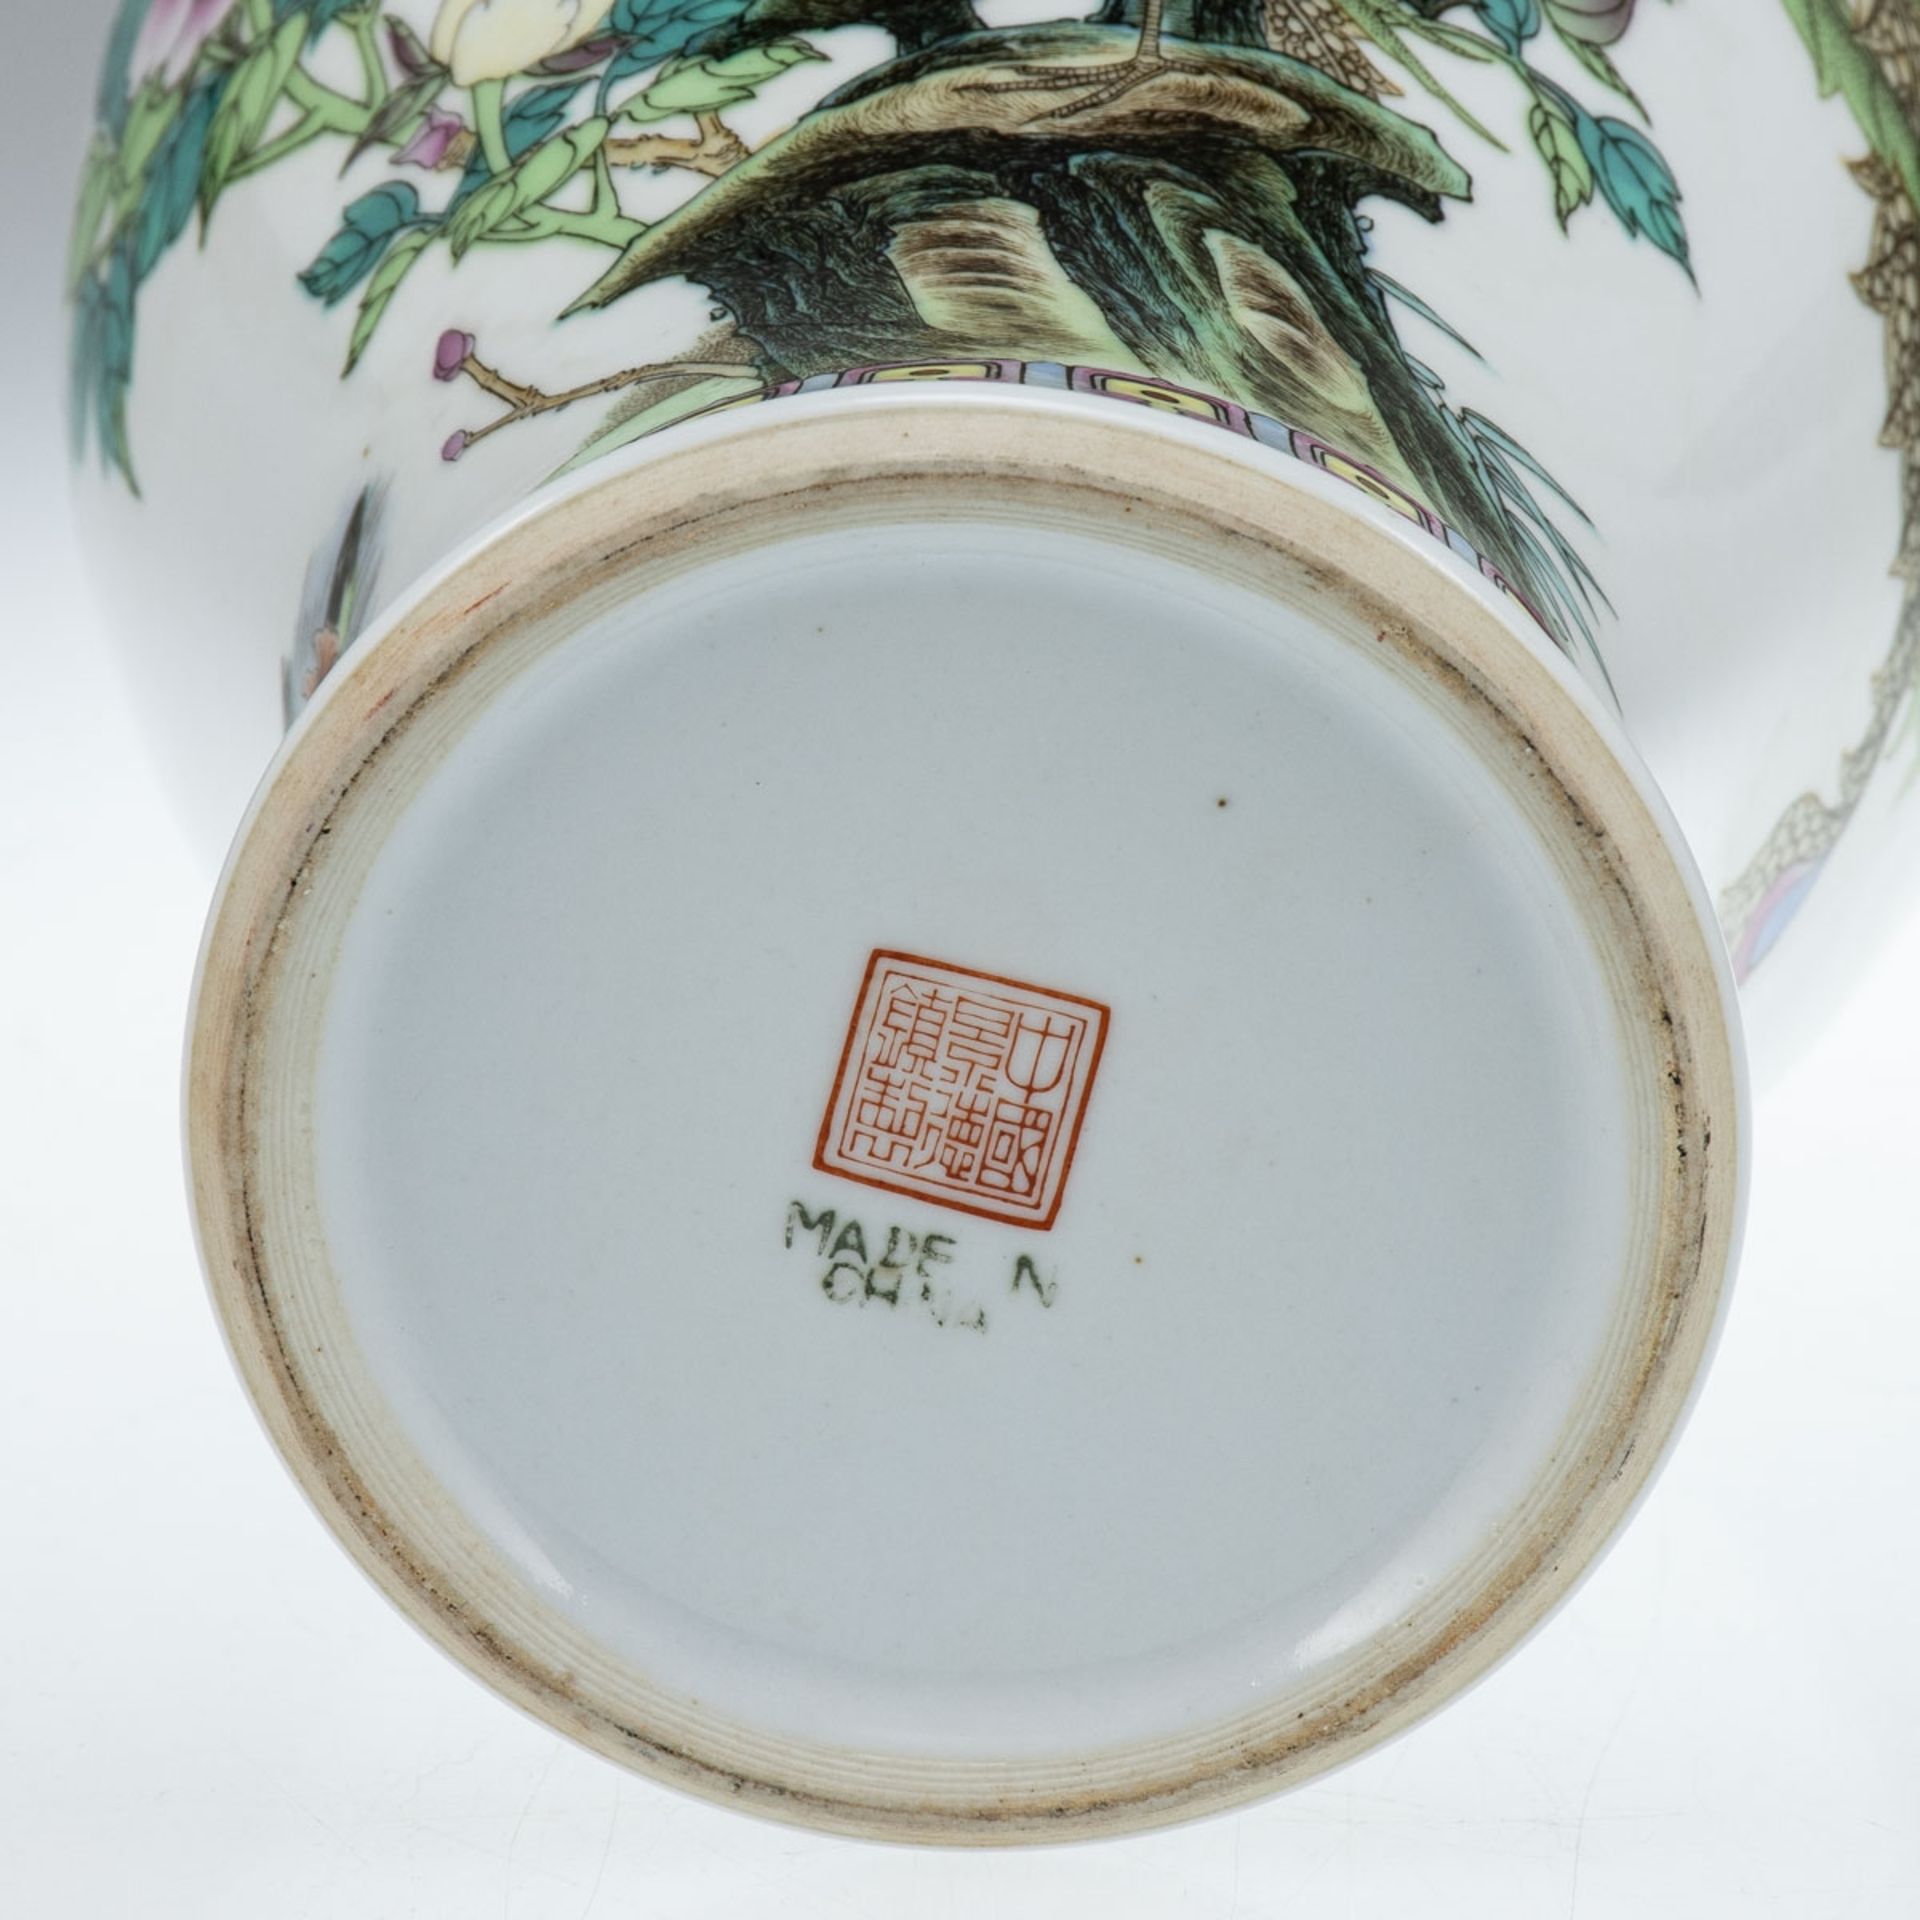 Vase, China, Republikzeit - Image 2 of 2